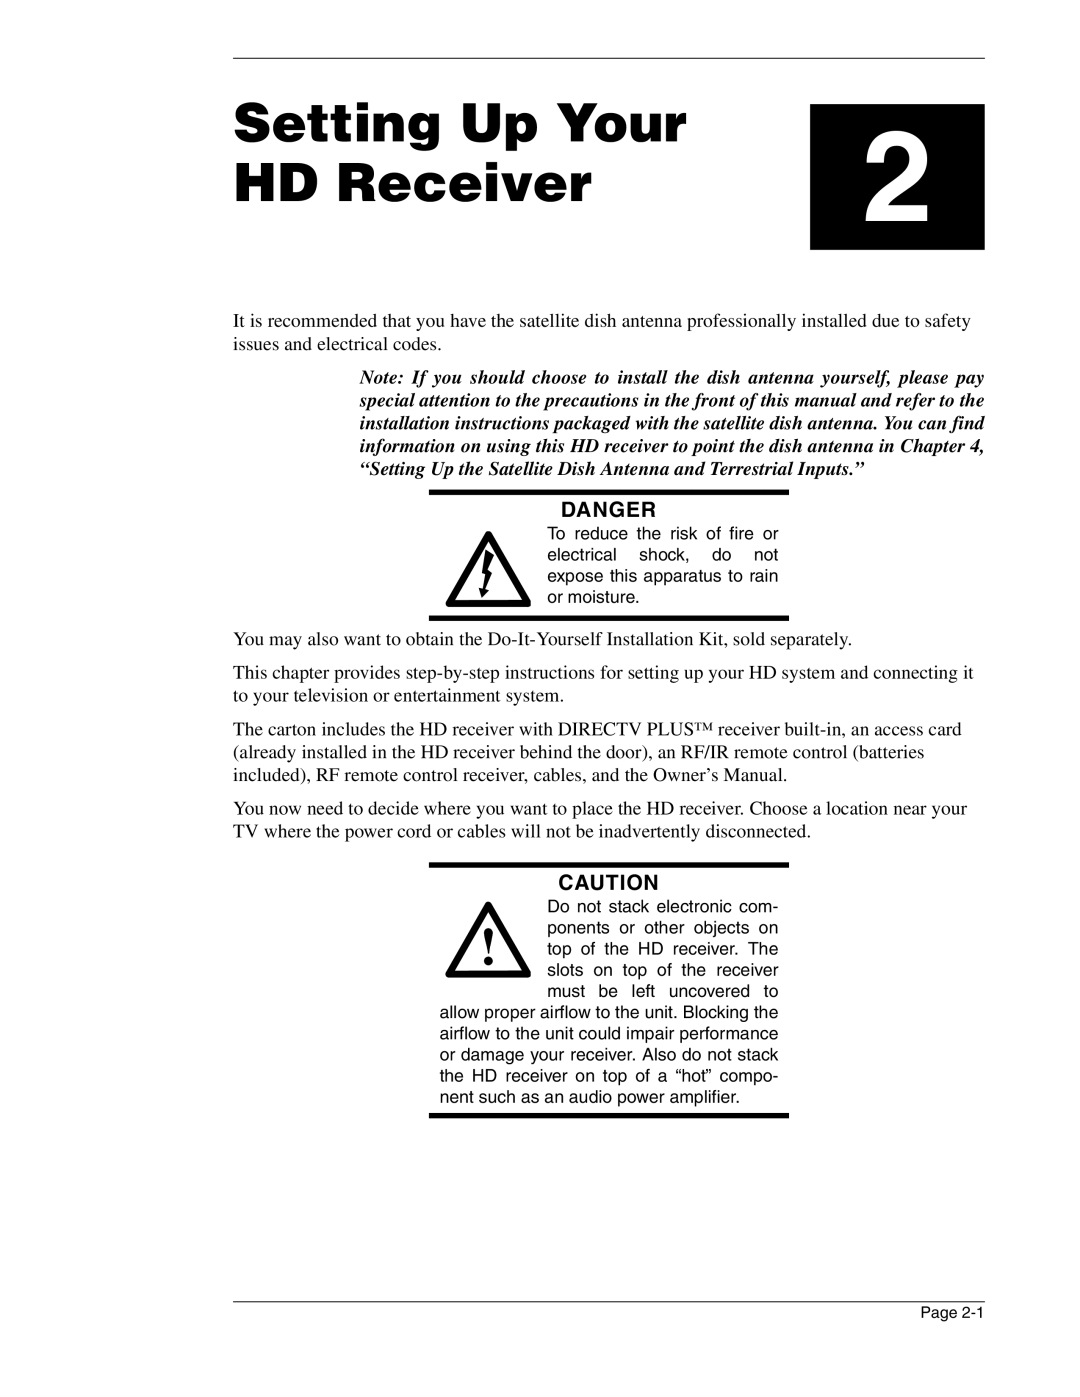 DirecTV HIRD-E86 manual Setting Up Your, HD Receiver, Danger 